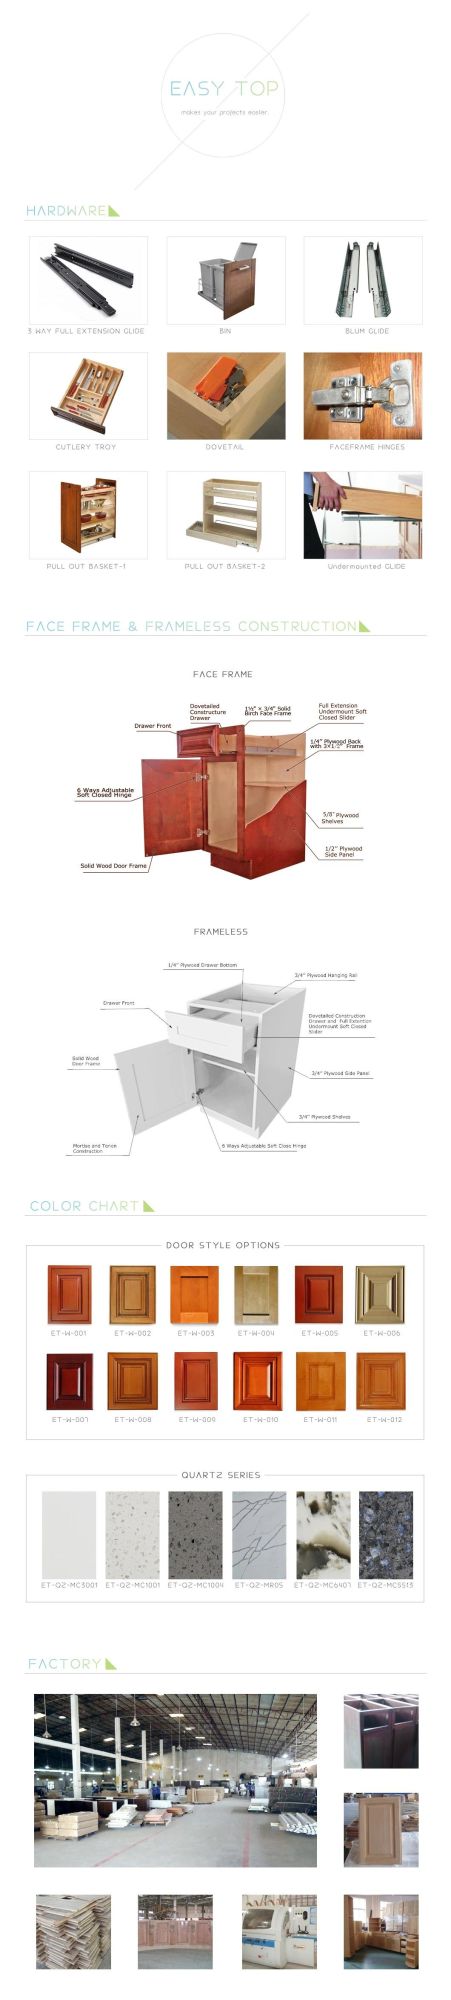 Guangzhou Professional Shaker Style Best America Modular Kitchen Designs Cabinet Furniture